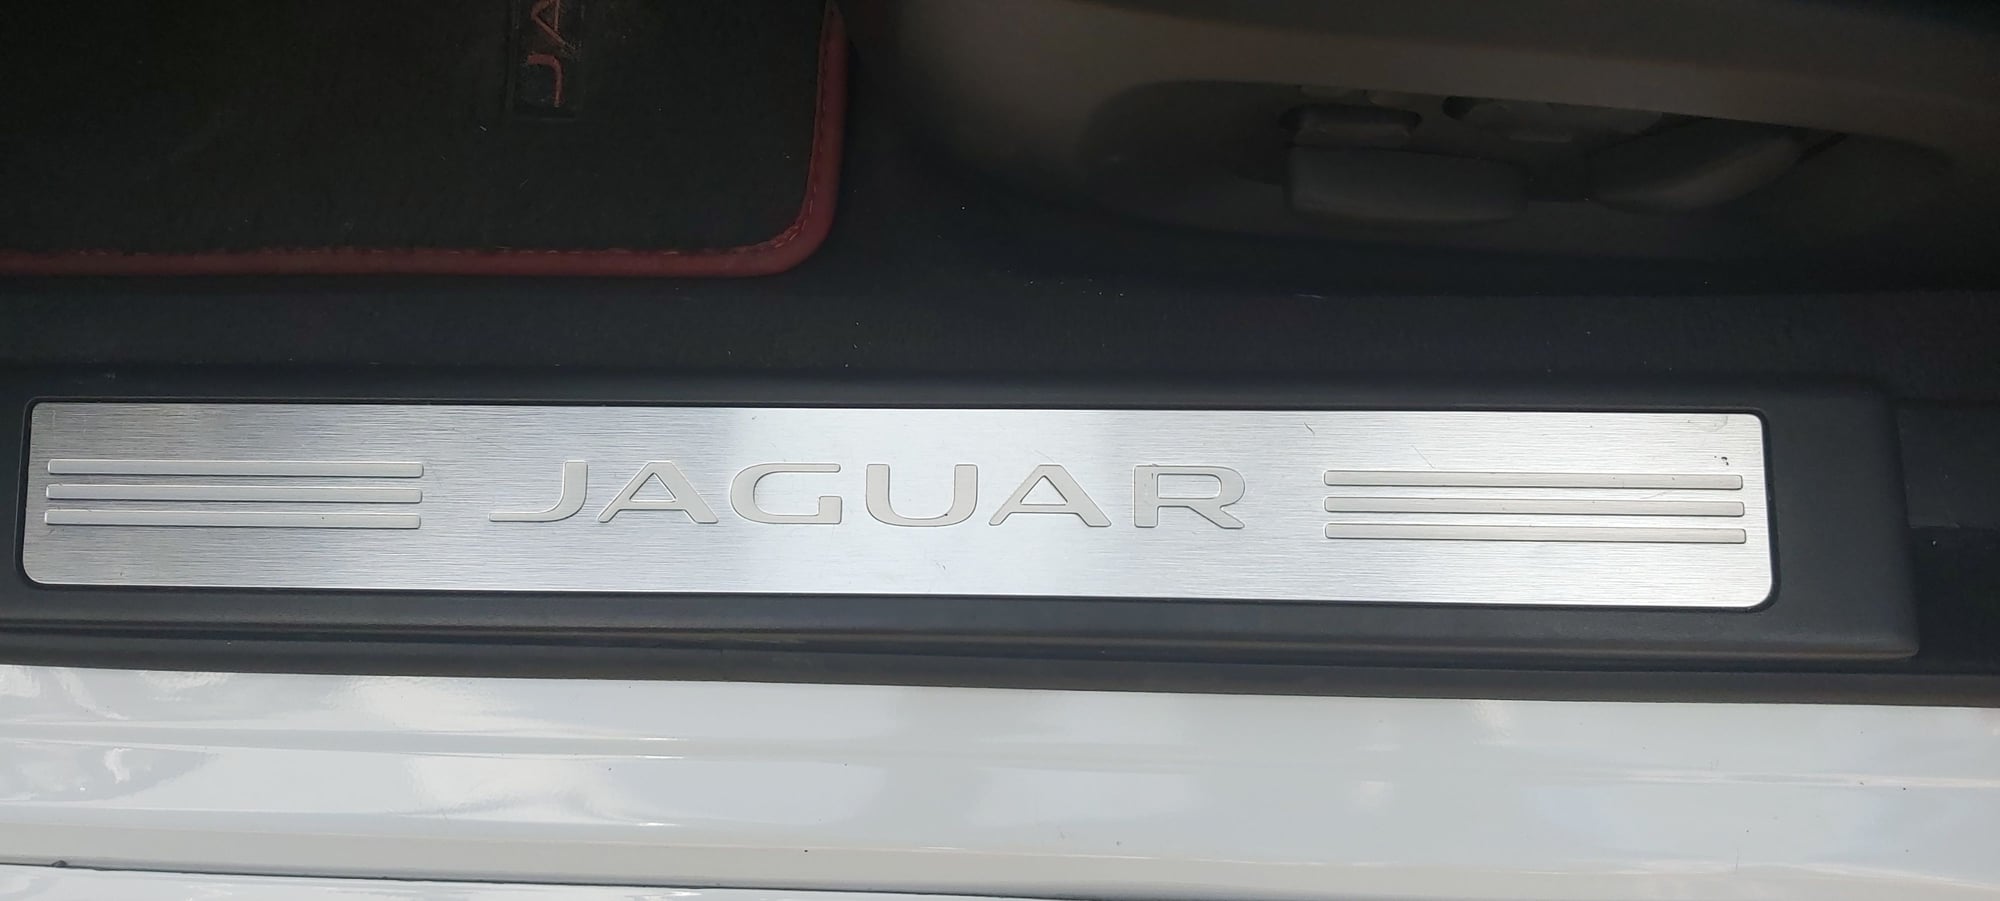 2015 Jaguar XF - Jaguar XF-S Sportbrake 3.0 V6 D S Portfolio - Used - VIN SAJAC0325FNU48644 - 95,000 Miles - 6 cyl - 2WD - Automatic - Wagon - Portishead, Bristol BS20, United Kingdom